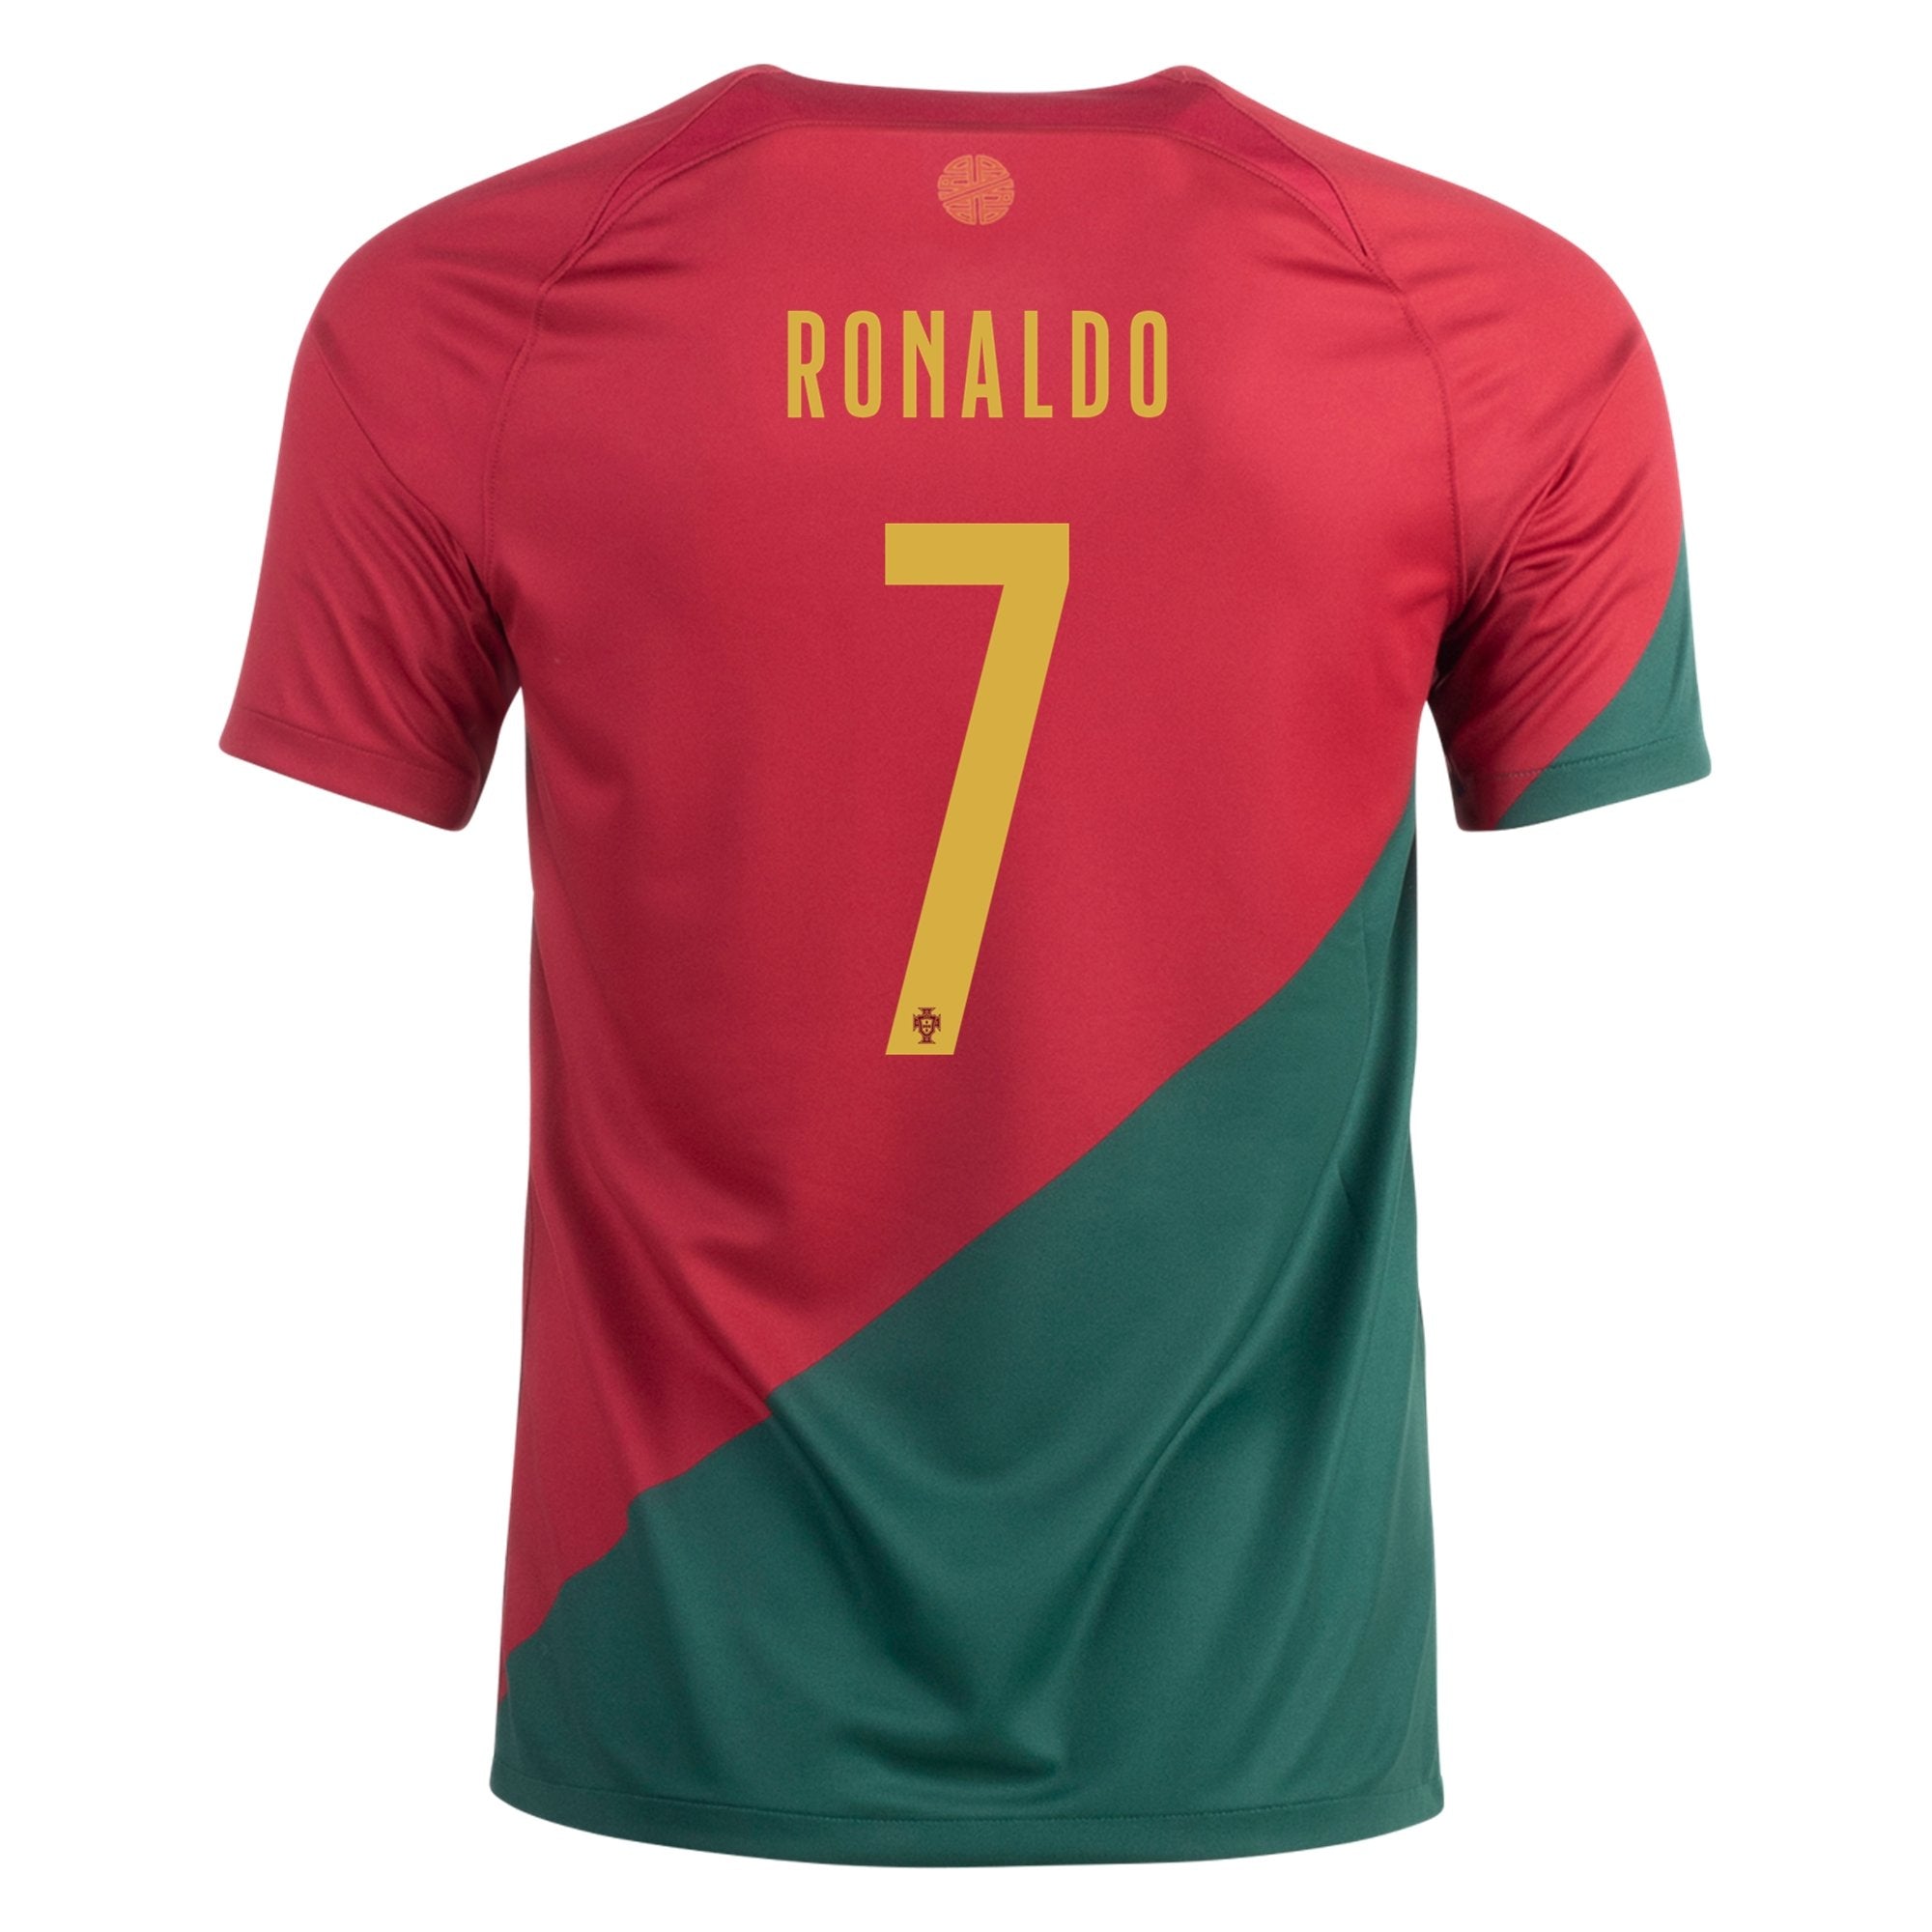 how much is a ronaldo shirt